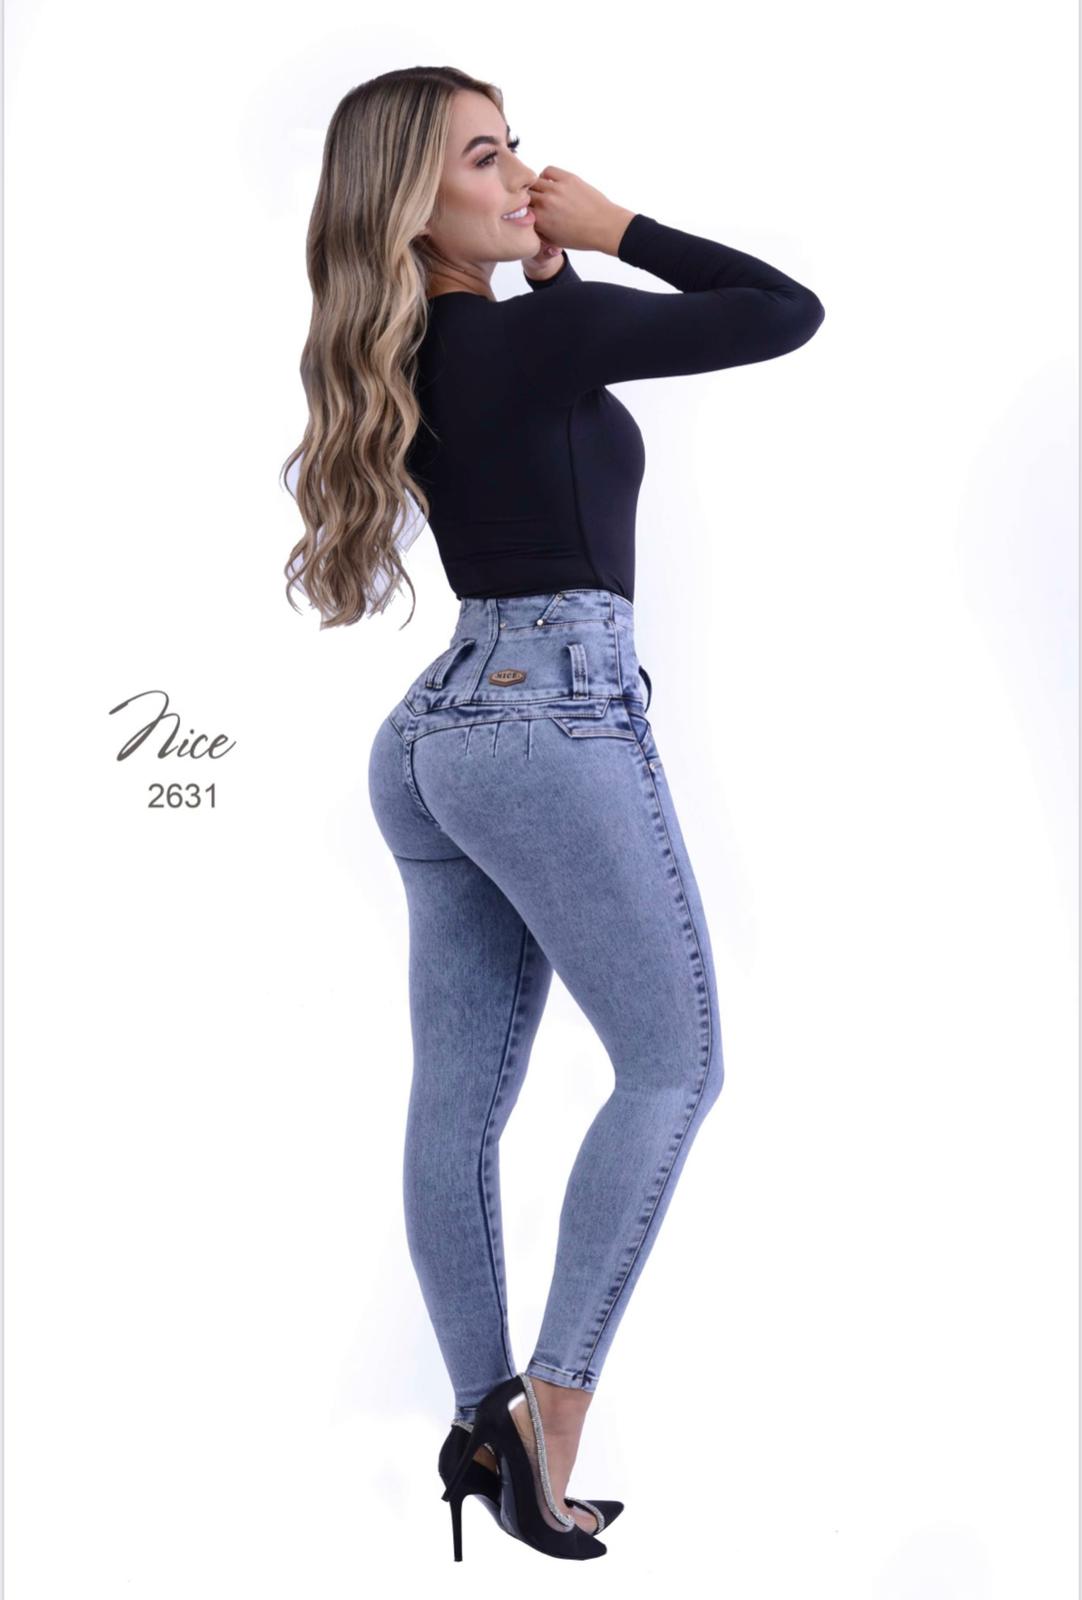 Marigold's Colombian Jeans Levantacola